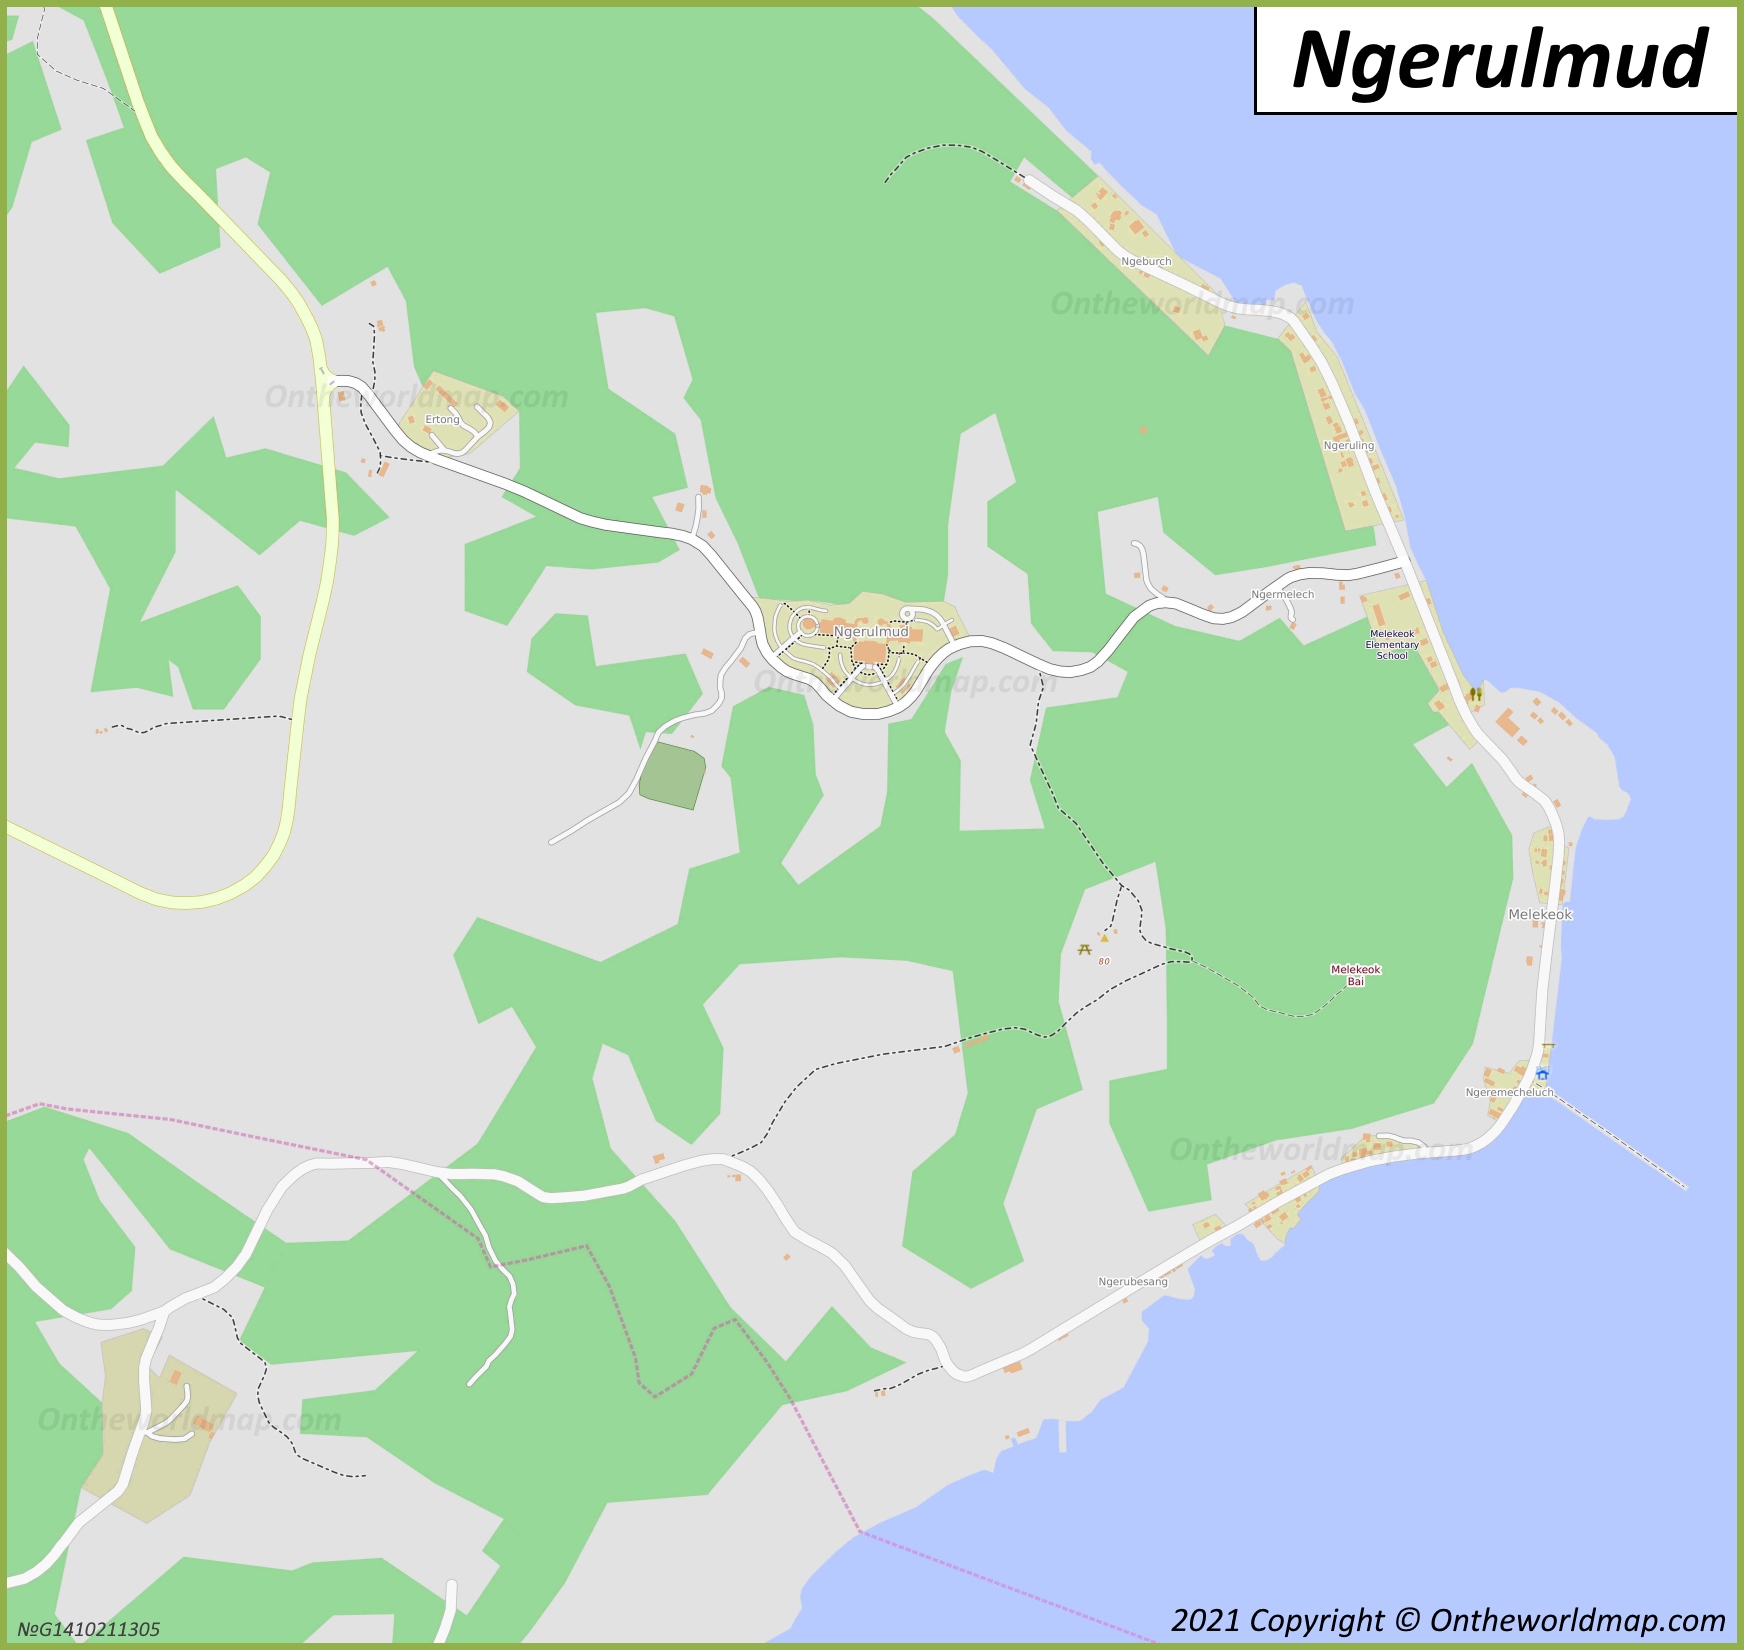 Map of Ngerulmud